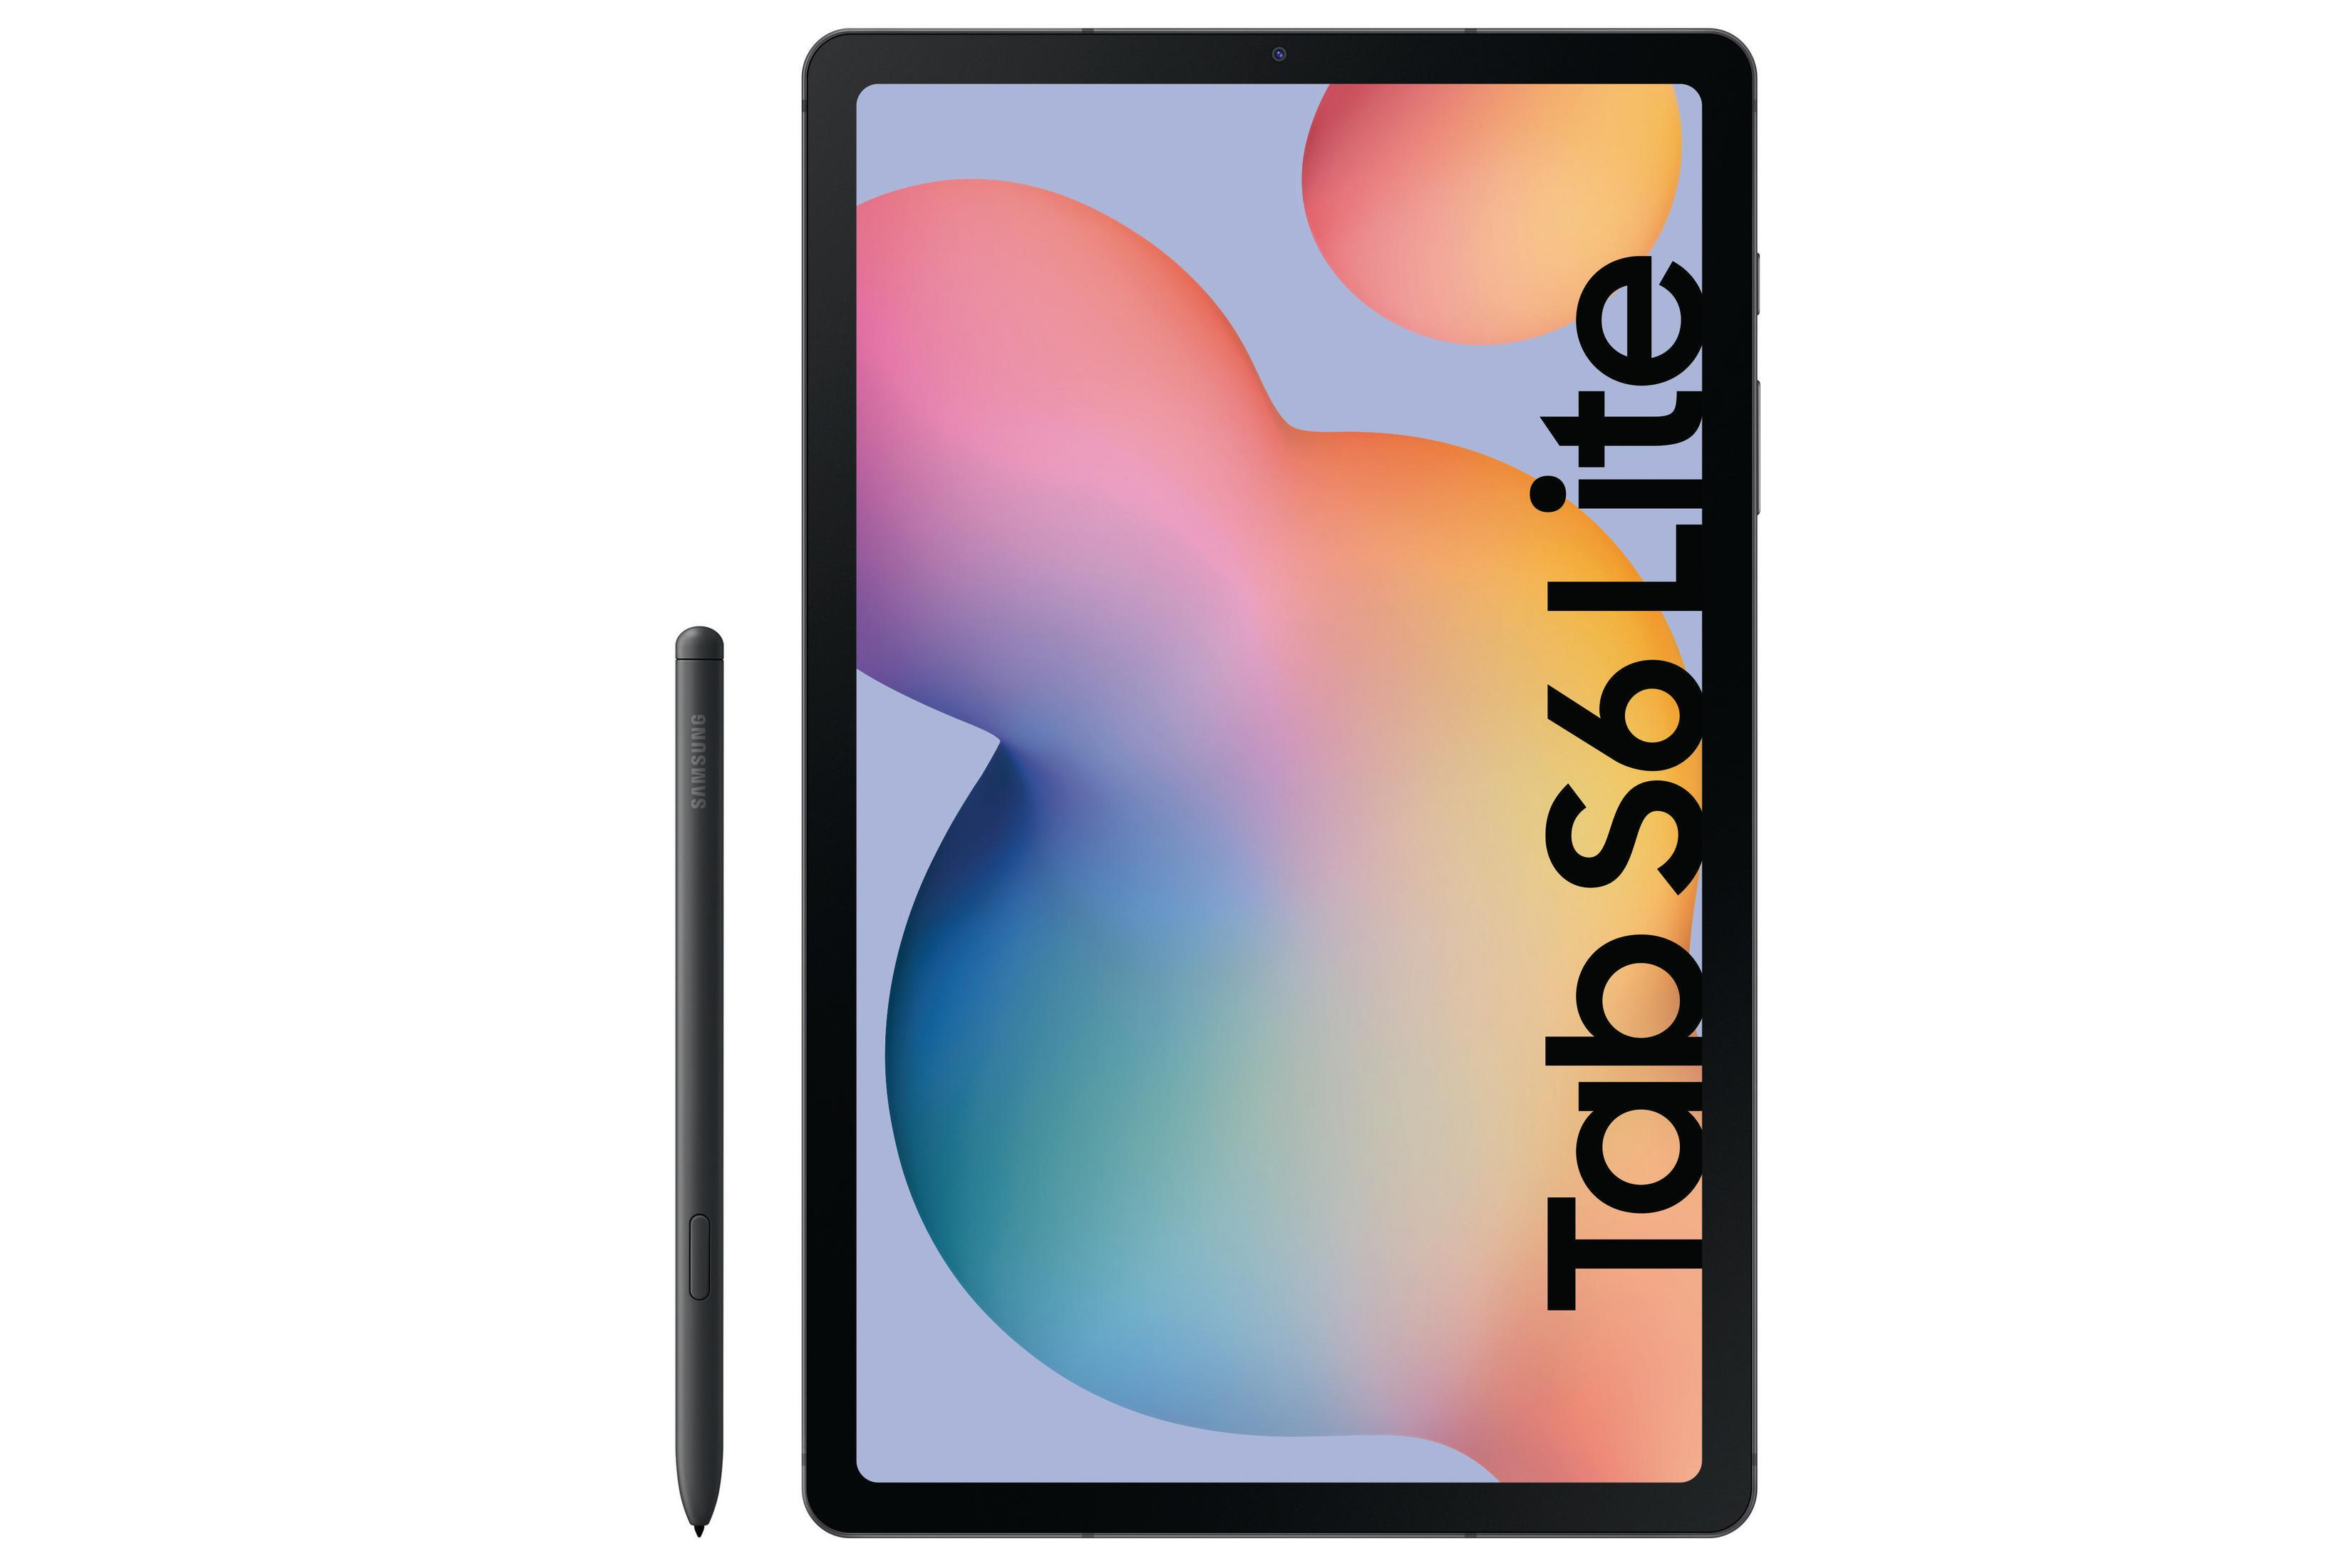 SAMSUNG SM-P615NZAADBT TAB S6 LITE Tablet, 64 Oxford 64GB Gray GREY, Zoll, GB, 10,4 LTE